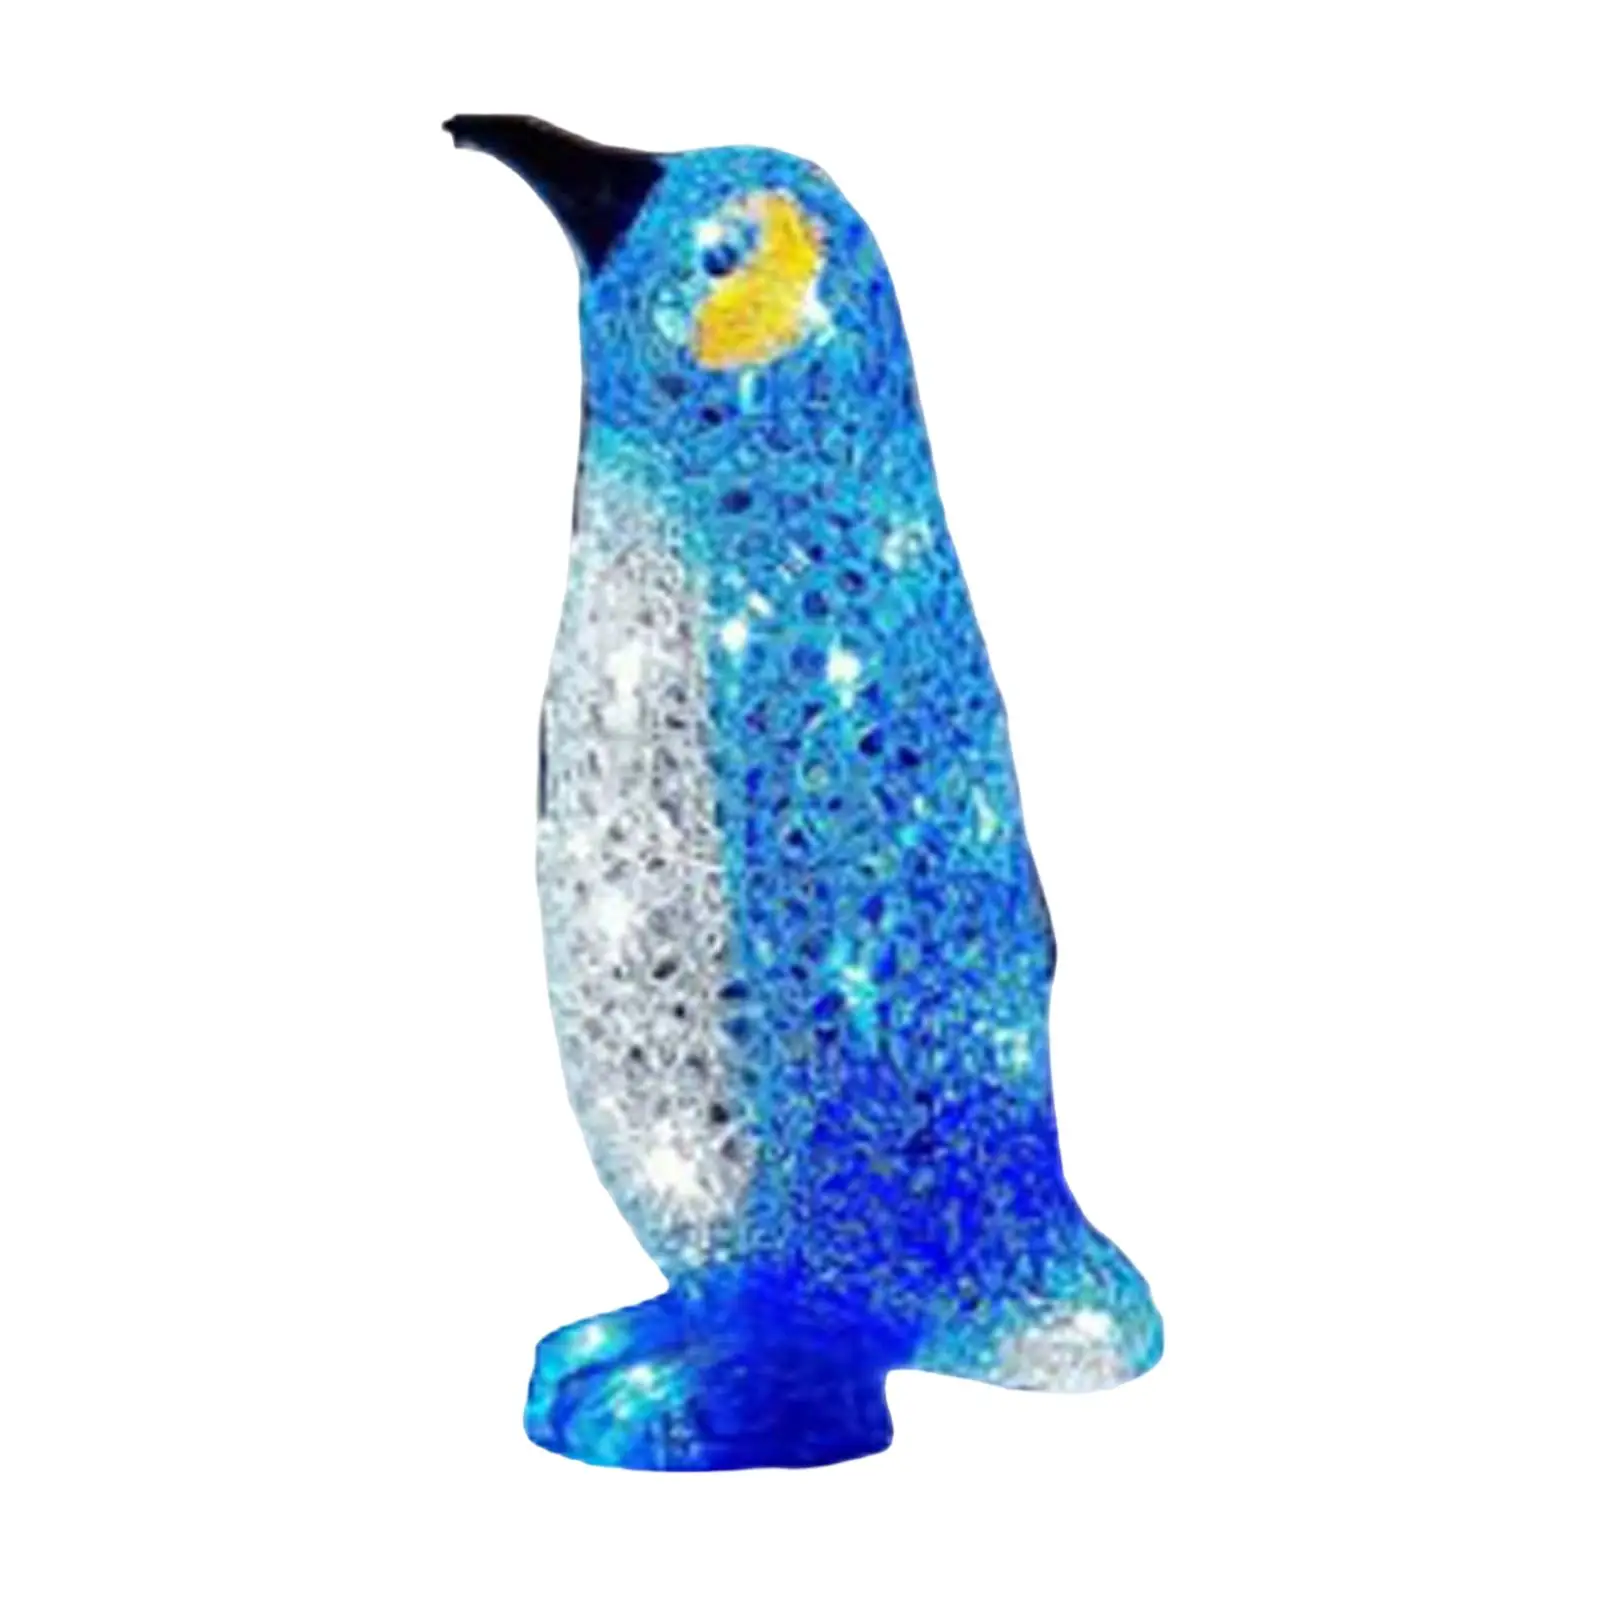 Light Up Penguin Creative Penguin Lighting for Yard Decoration Ornament